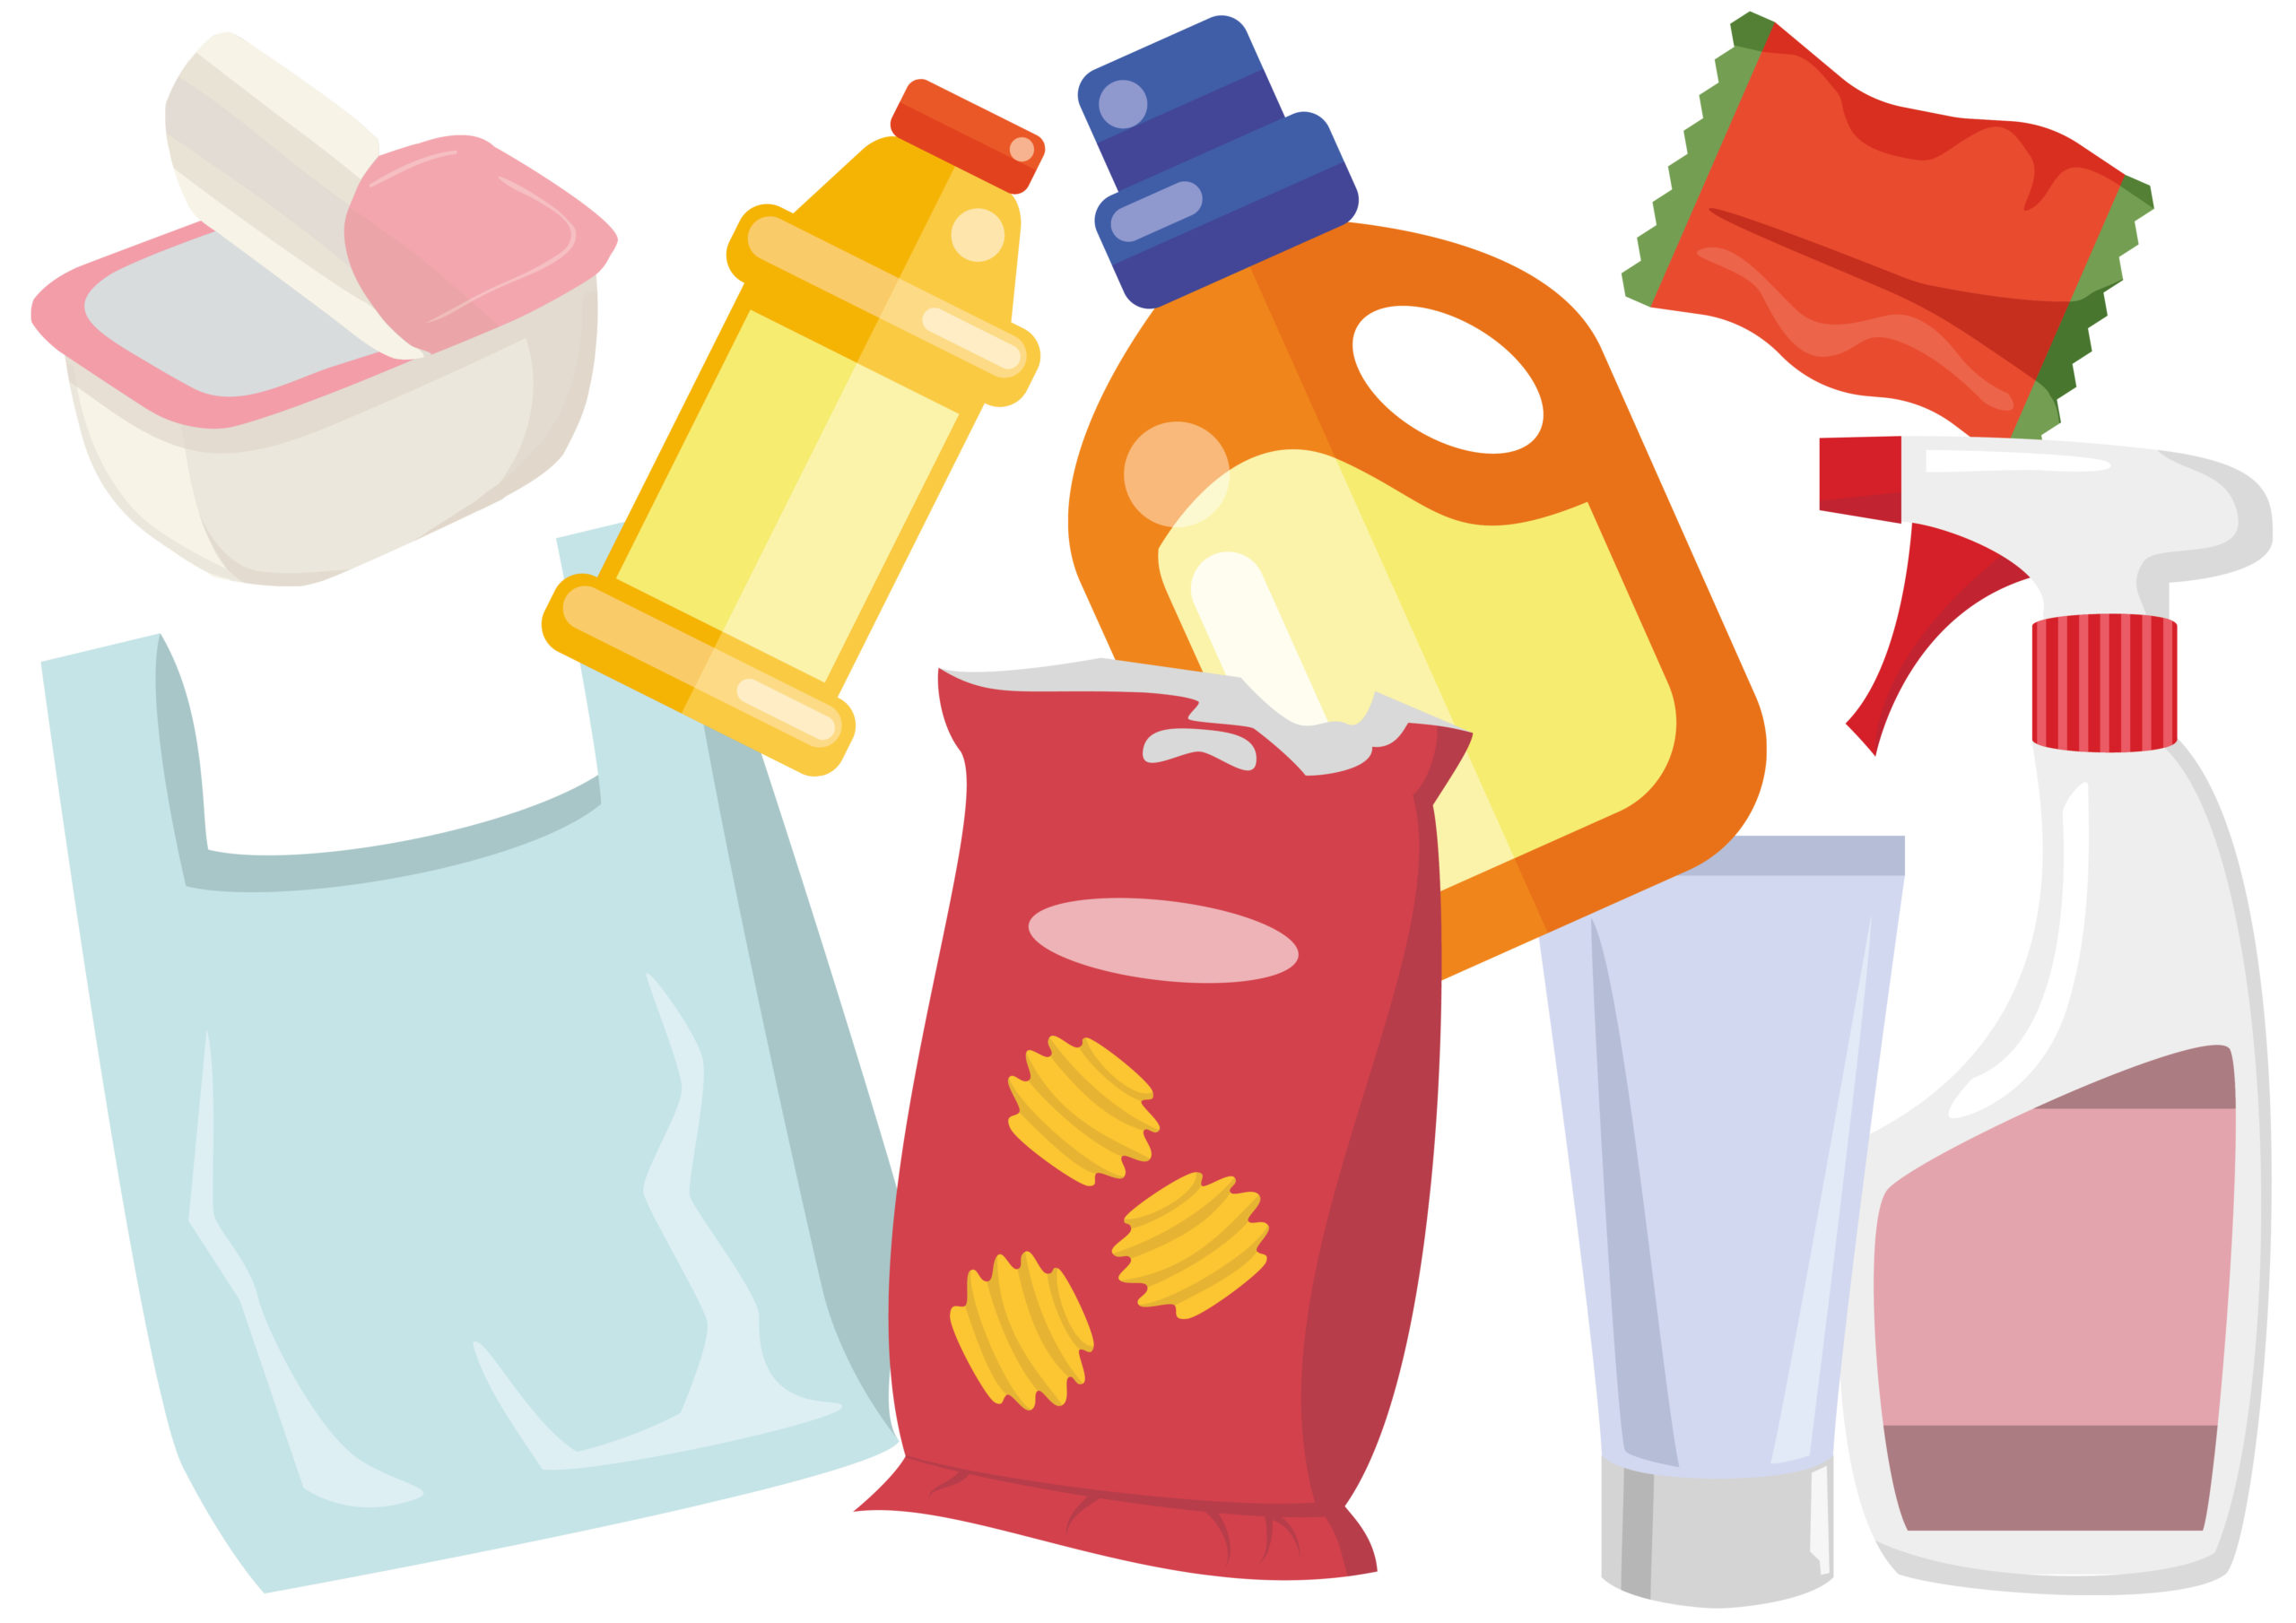 Muovipakkauksia: sipsipussi, muovikassi, kanisteri, muovipullo